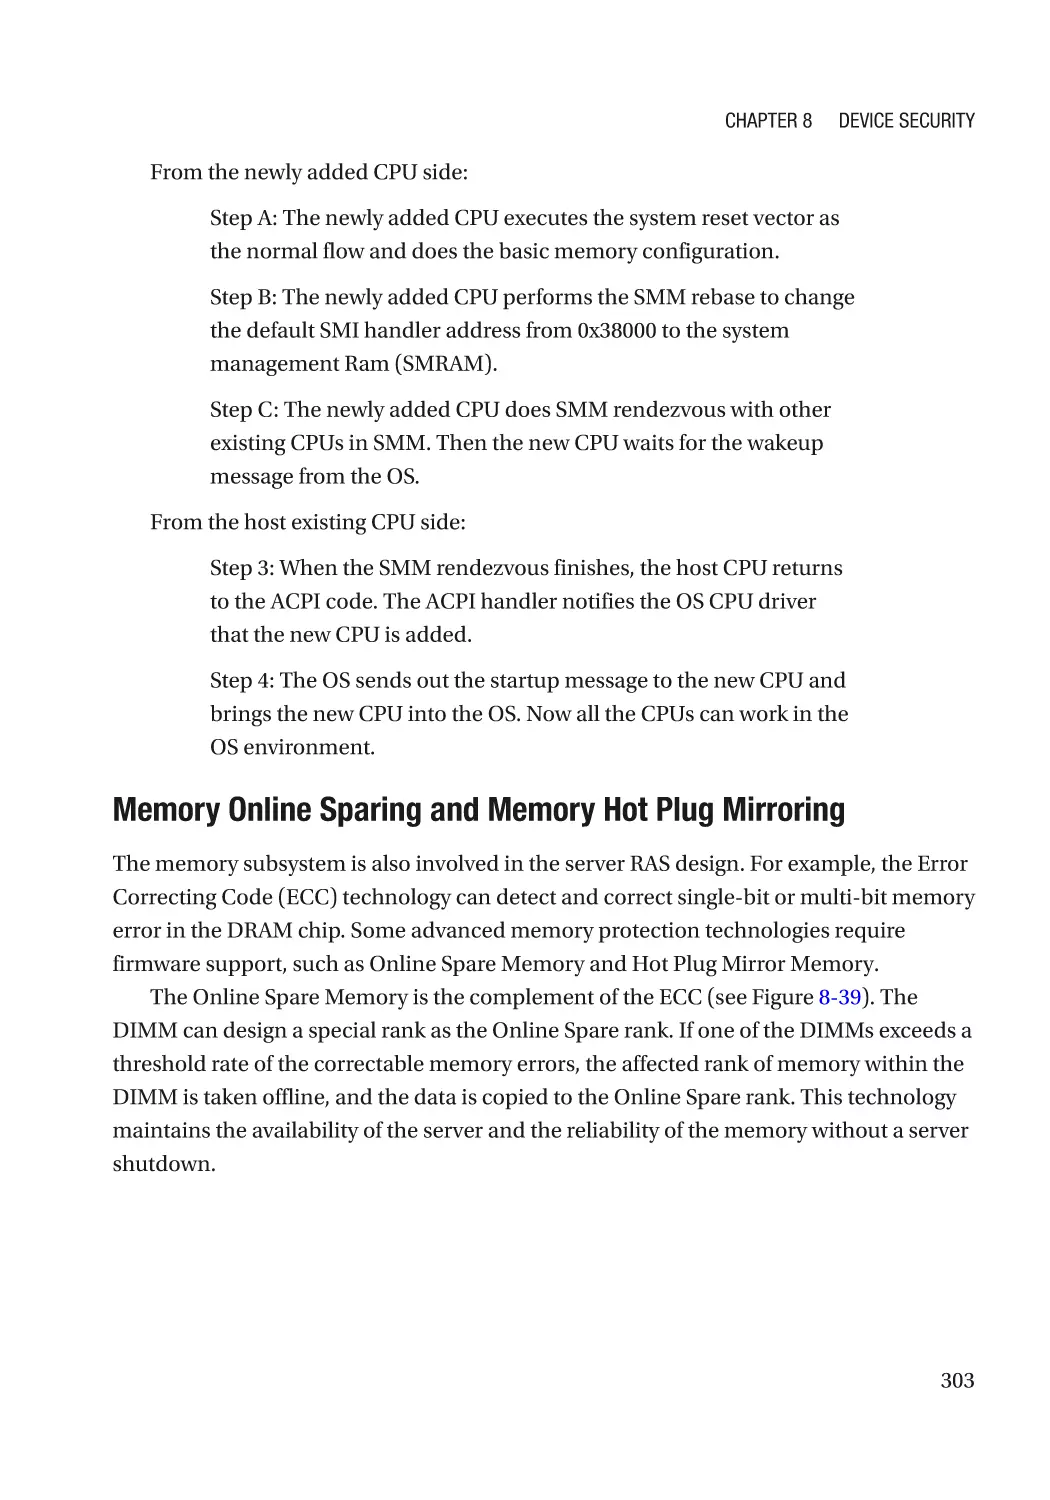 Memory Online Sparing and Memory Hot Plug Mirroring